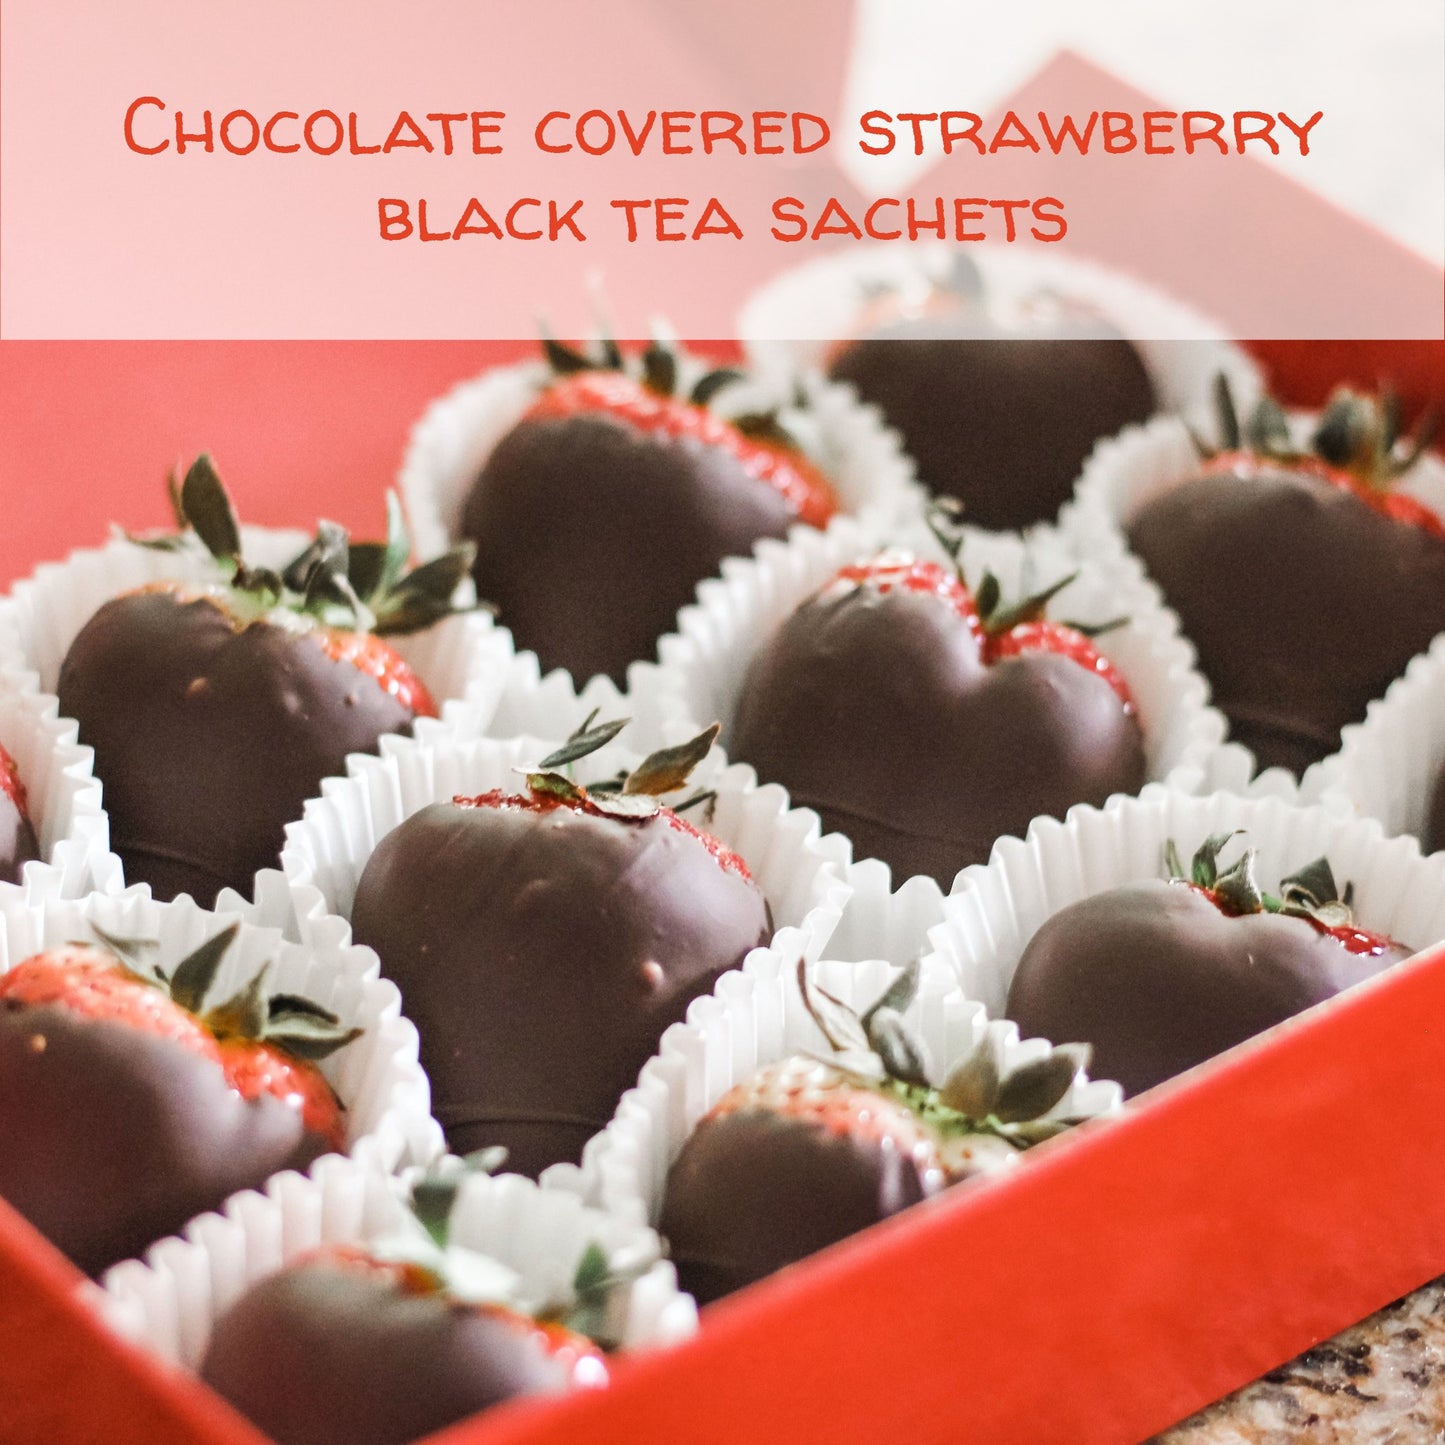 Gourmet Chocolate Covered Strawberries Black Tea, 15 Sachets Teabags The Grateful Tea Co. 